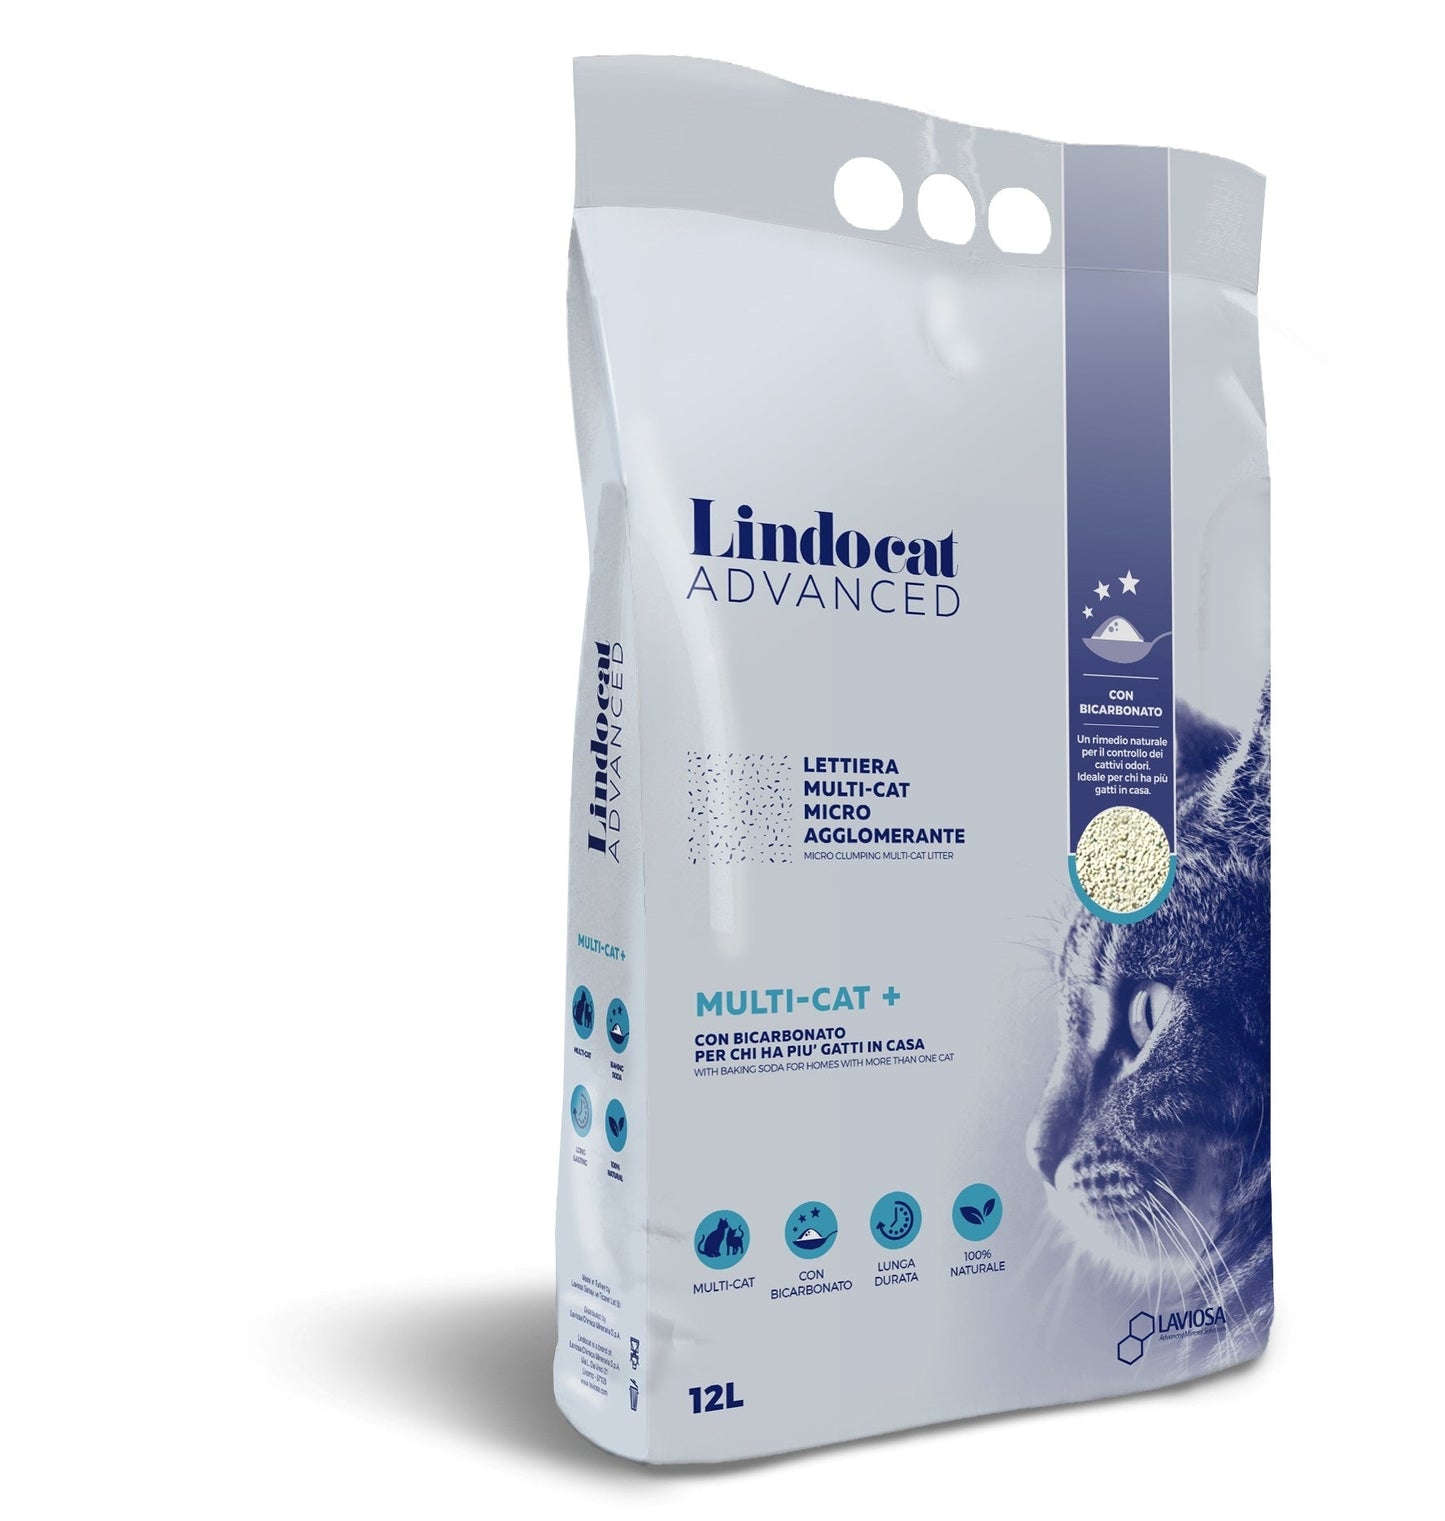 Lindocat White Bentonite Advanced Multi-Cat+ - 12L (Fragrance Free)